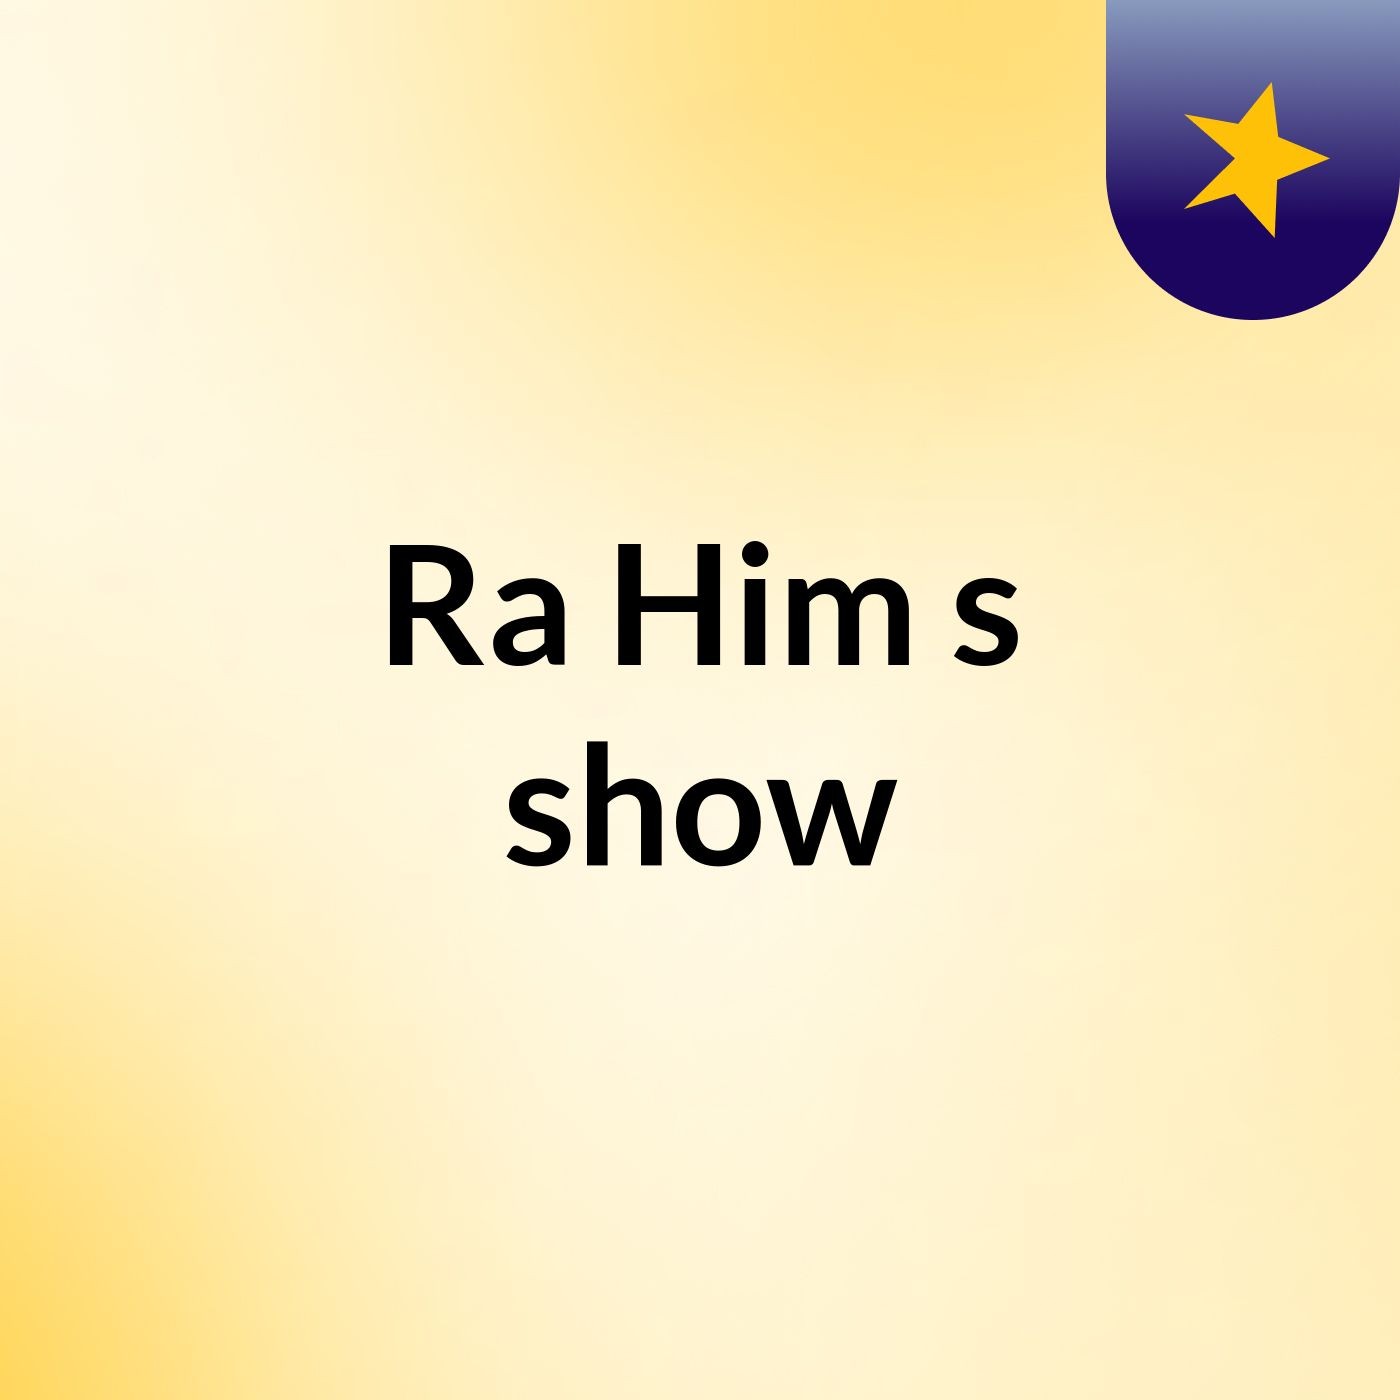 Ra Him's show